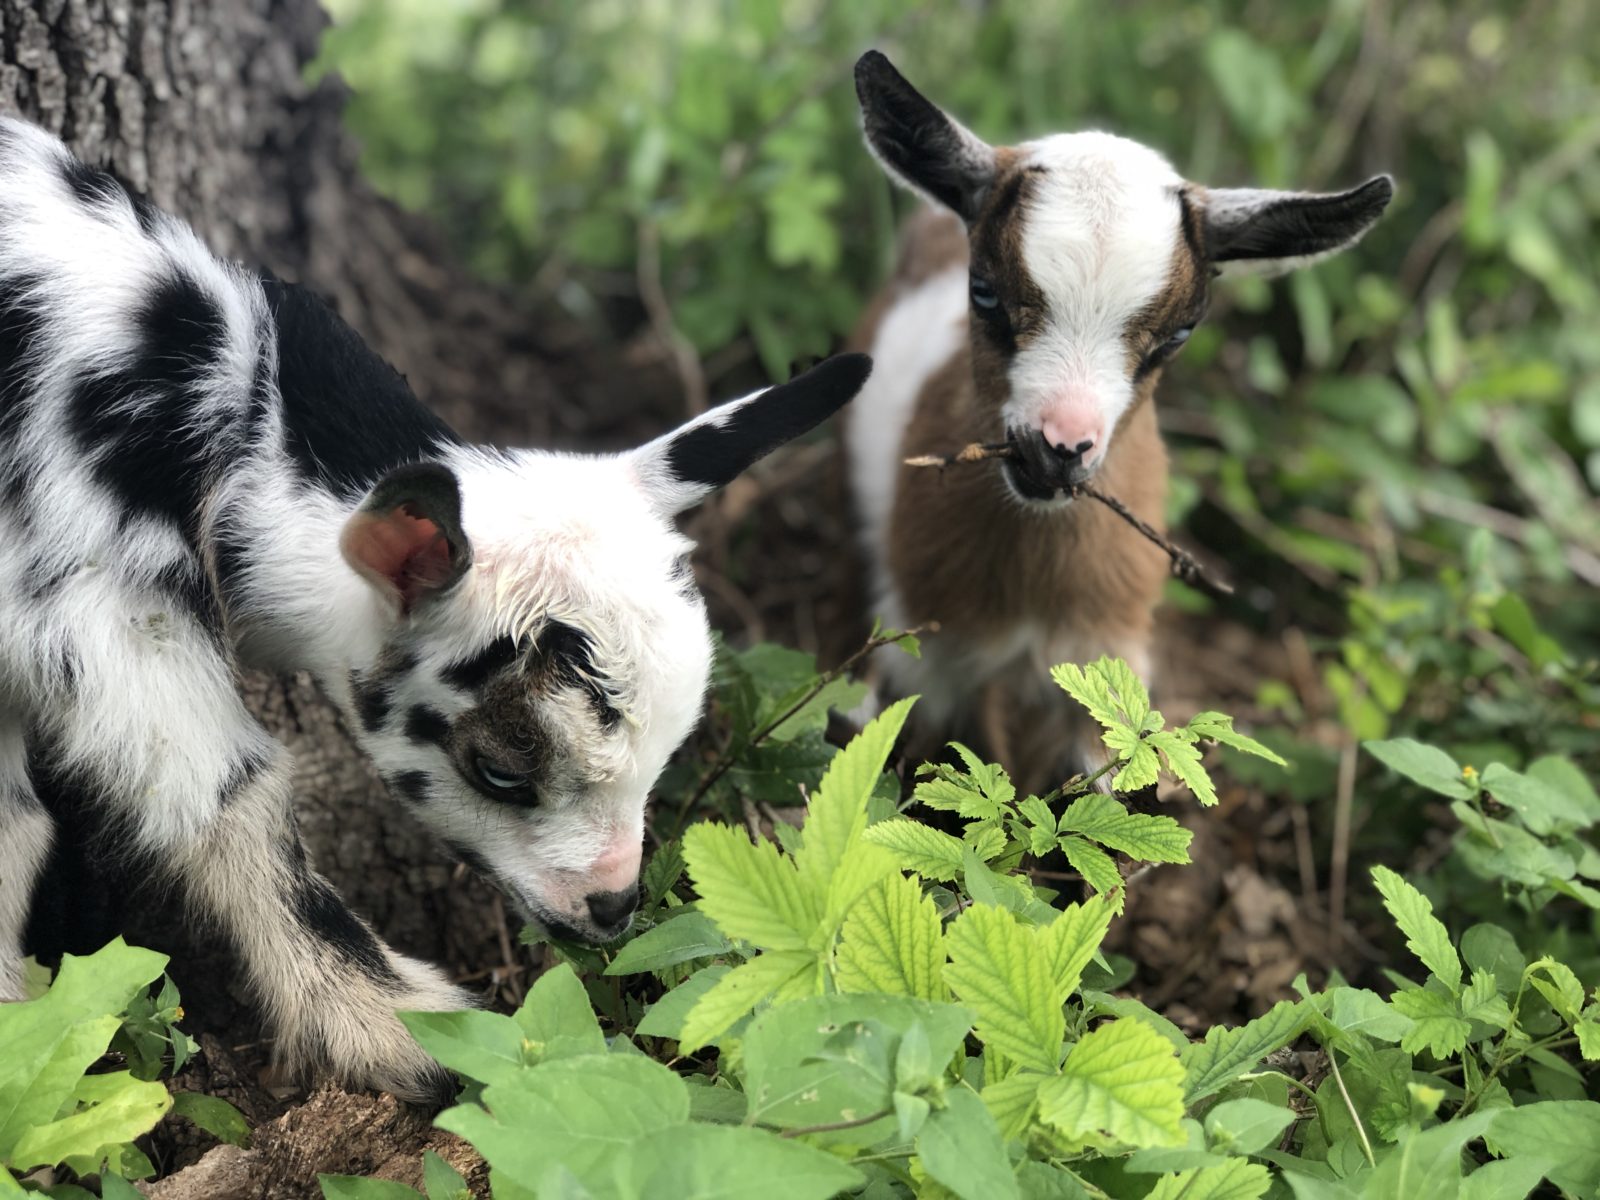 baby goat soap